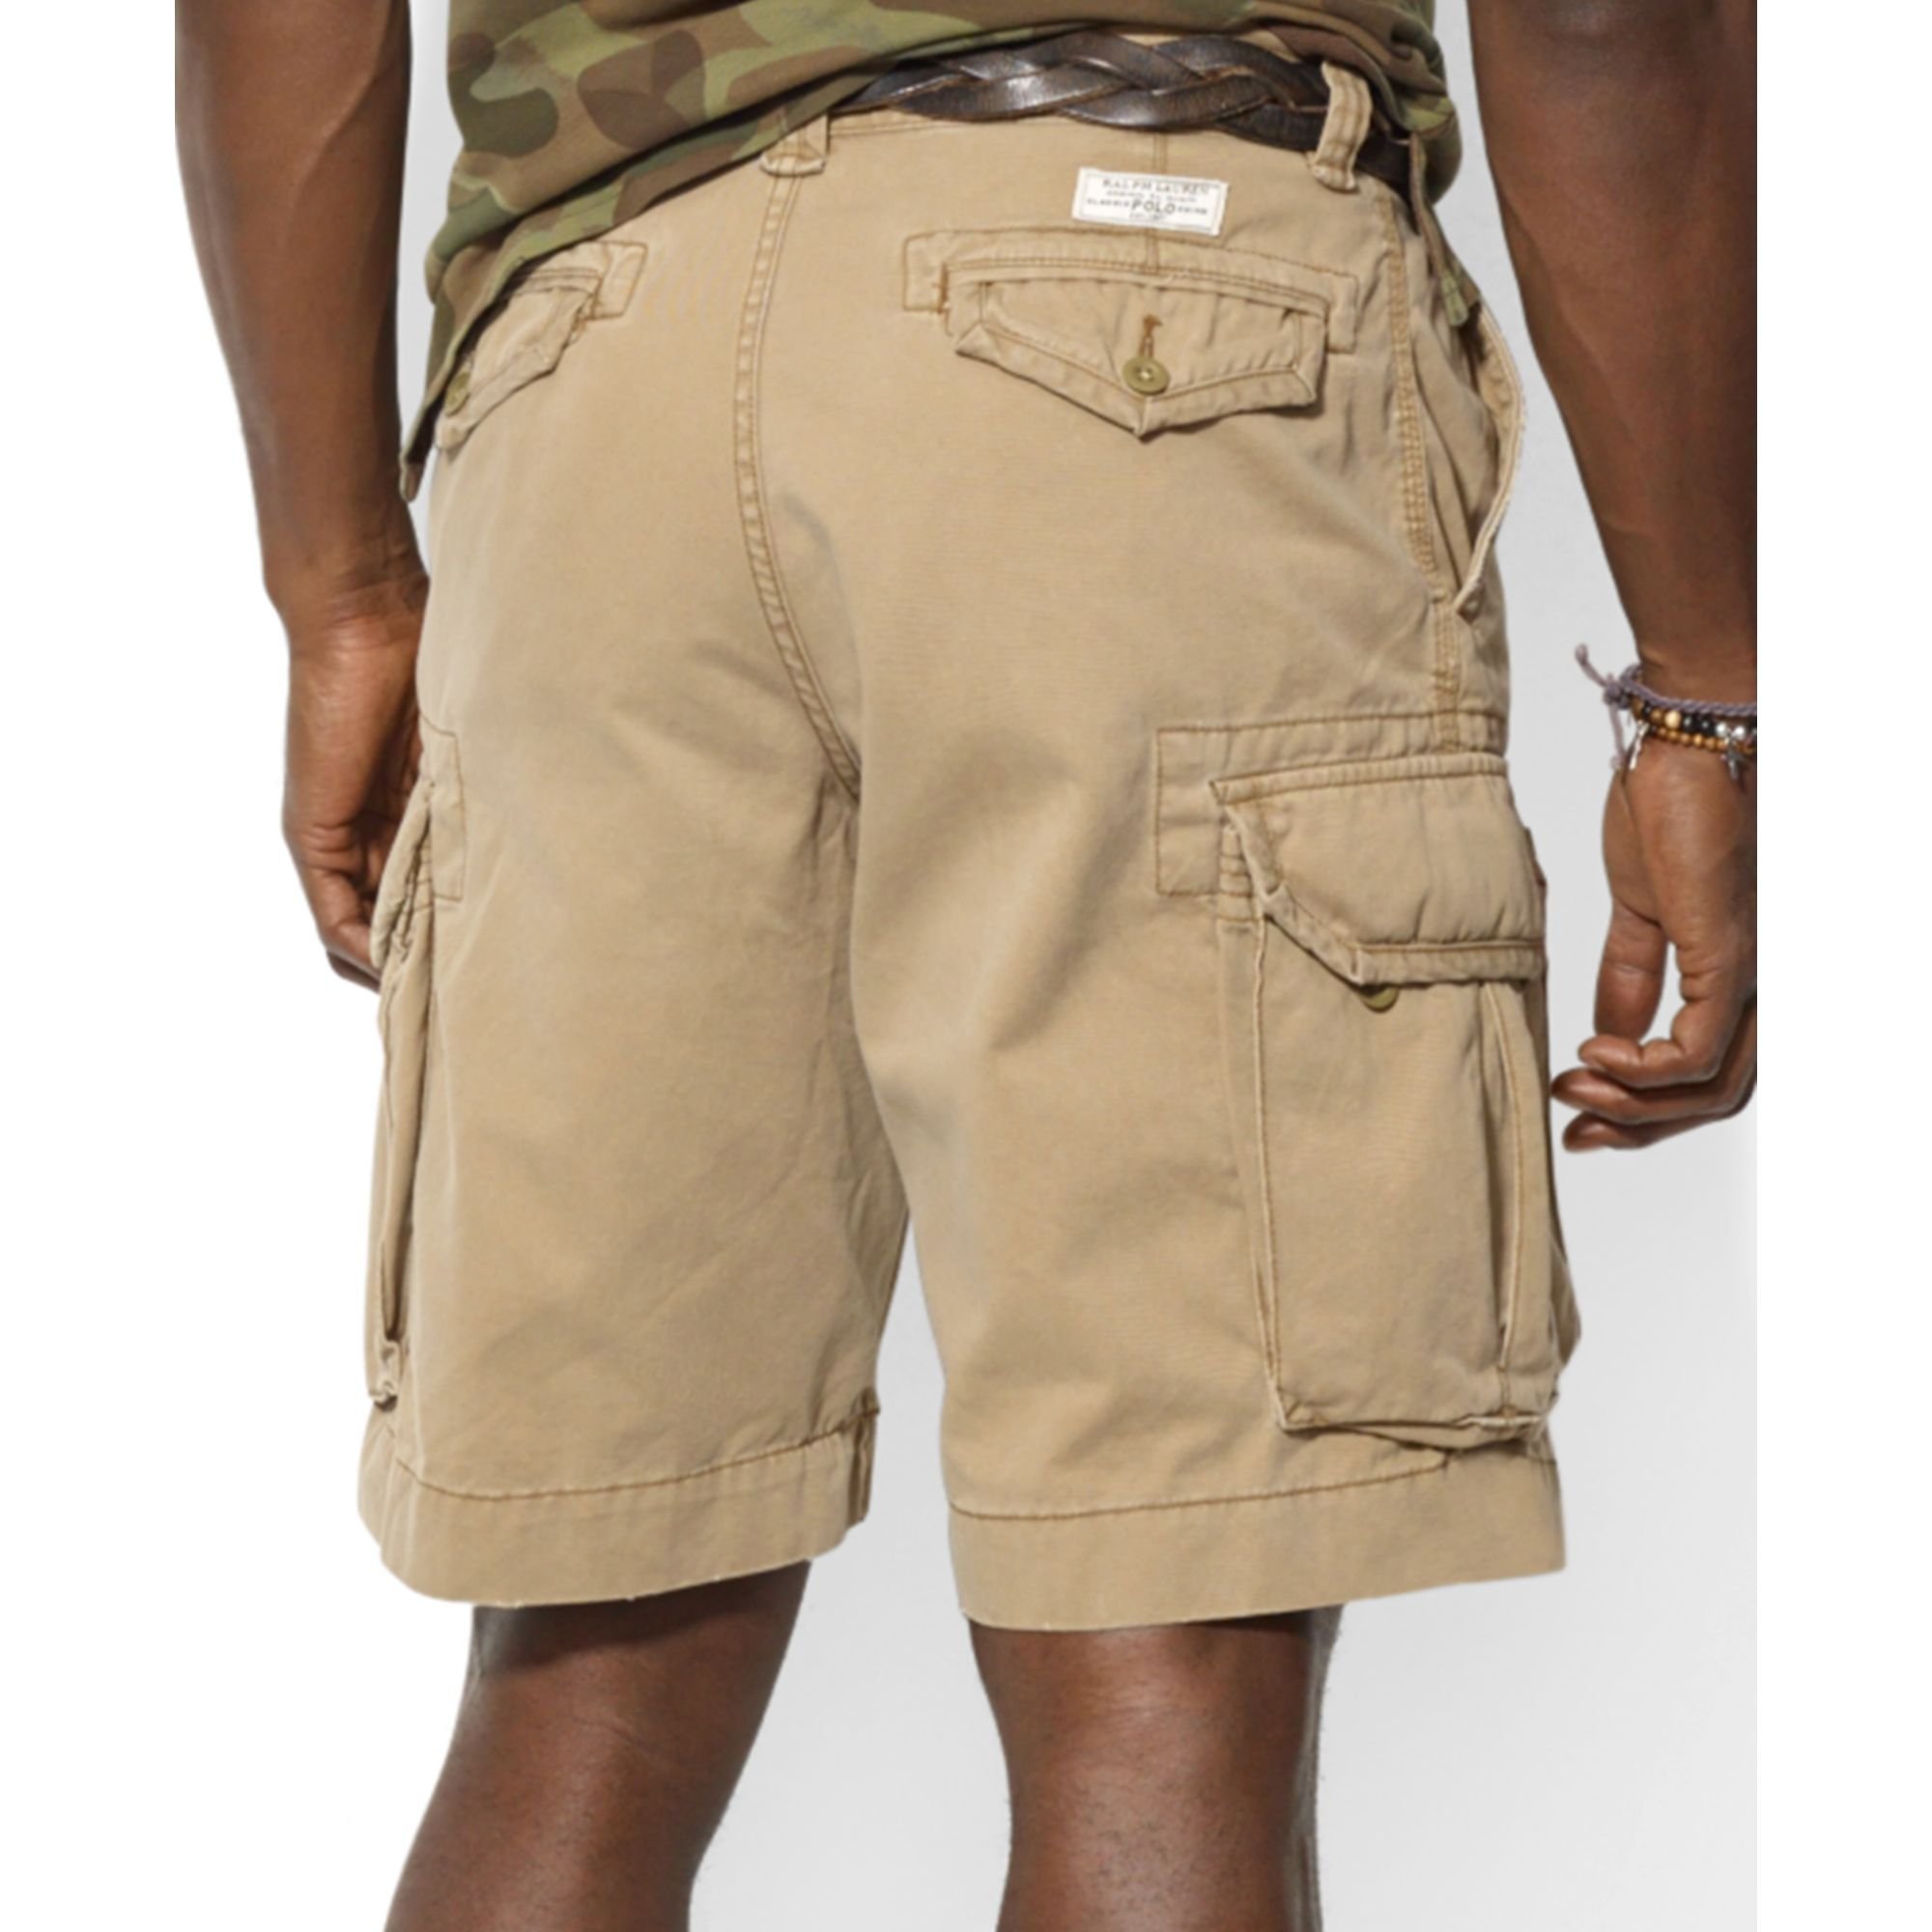 Choosing Which Men's Shorts To Buy